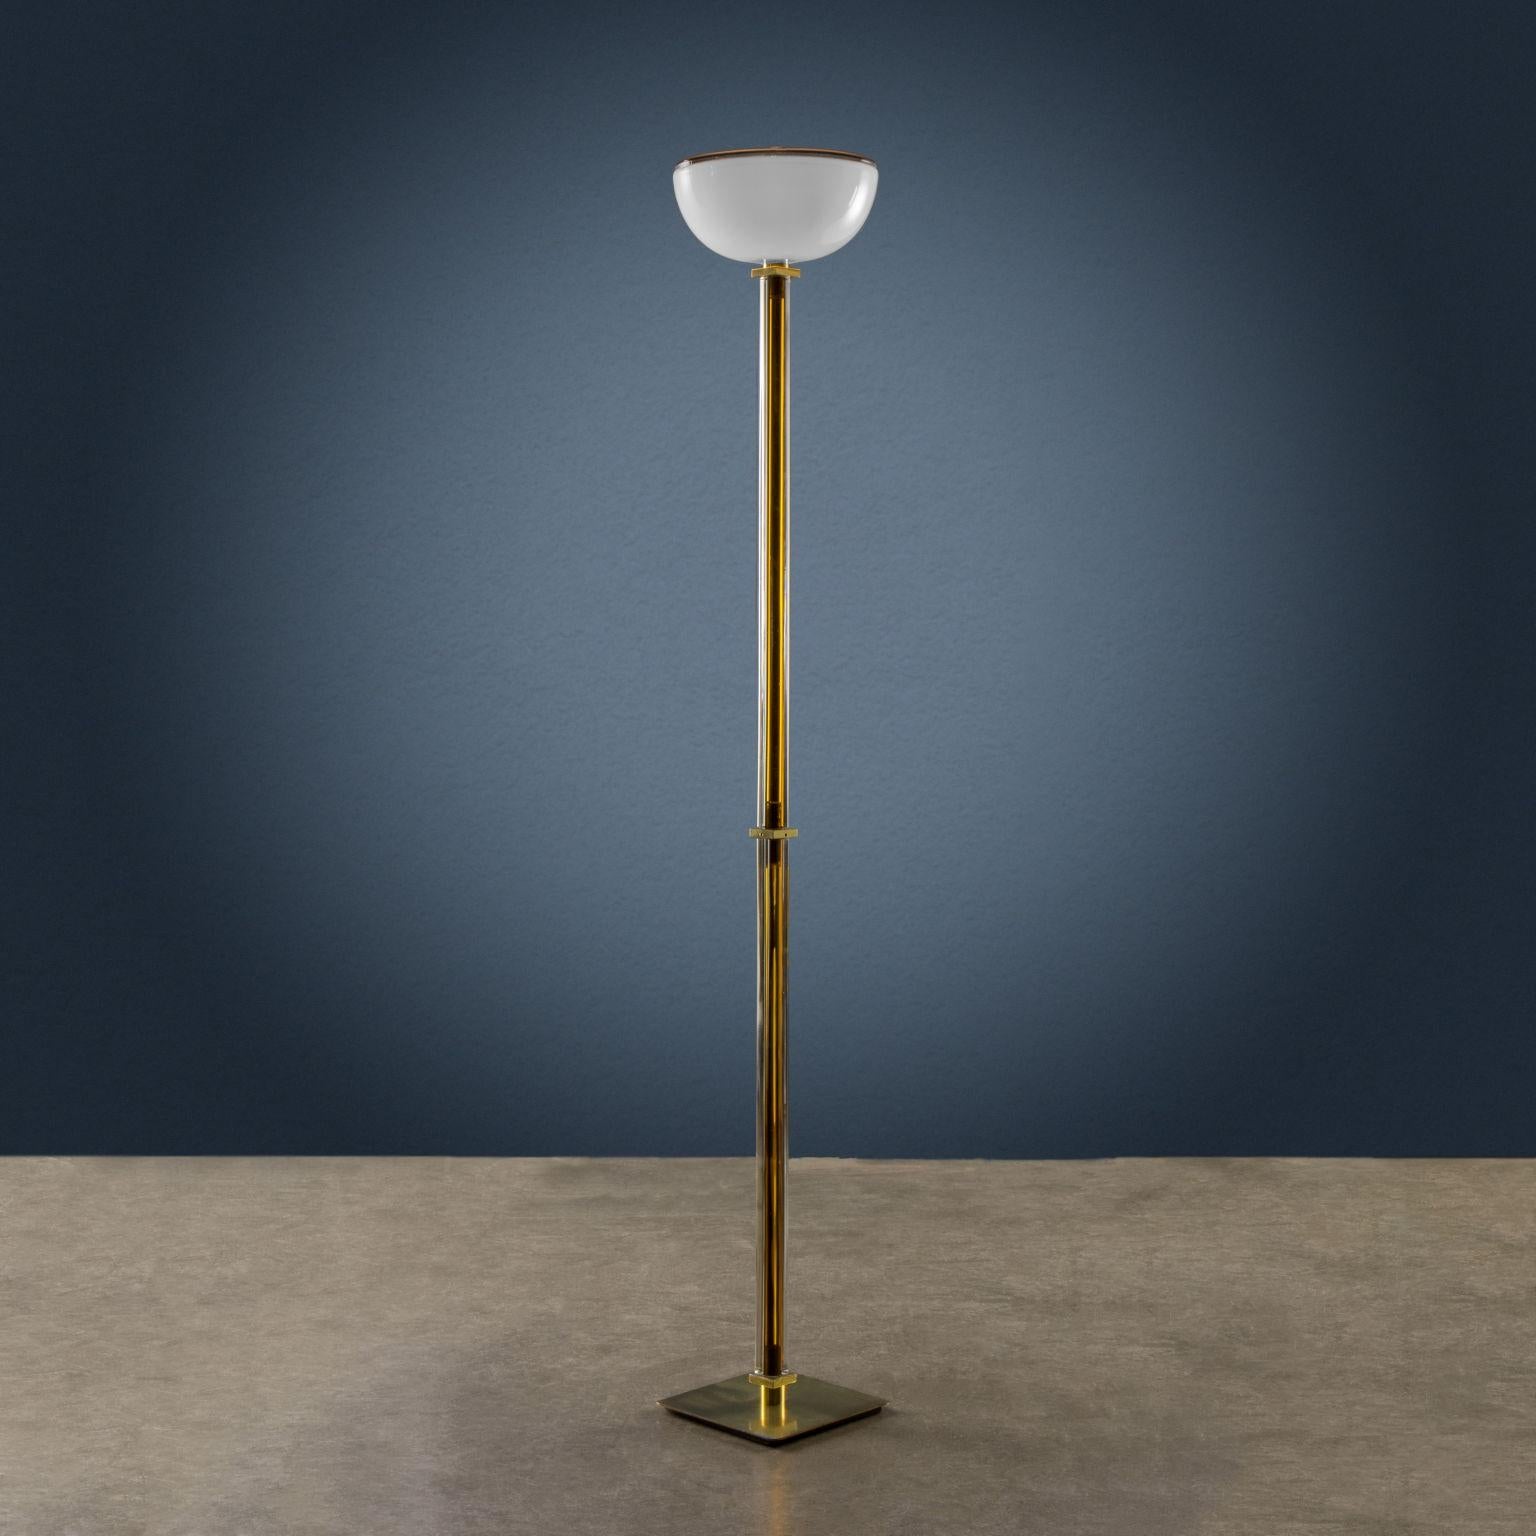 Floor lamp model ‘Tolboi’, produced by Venini since 1987.